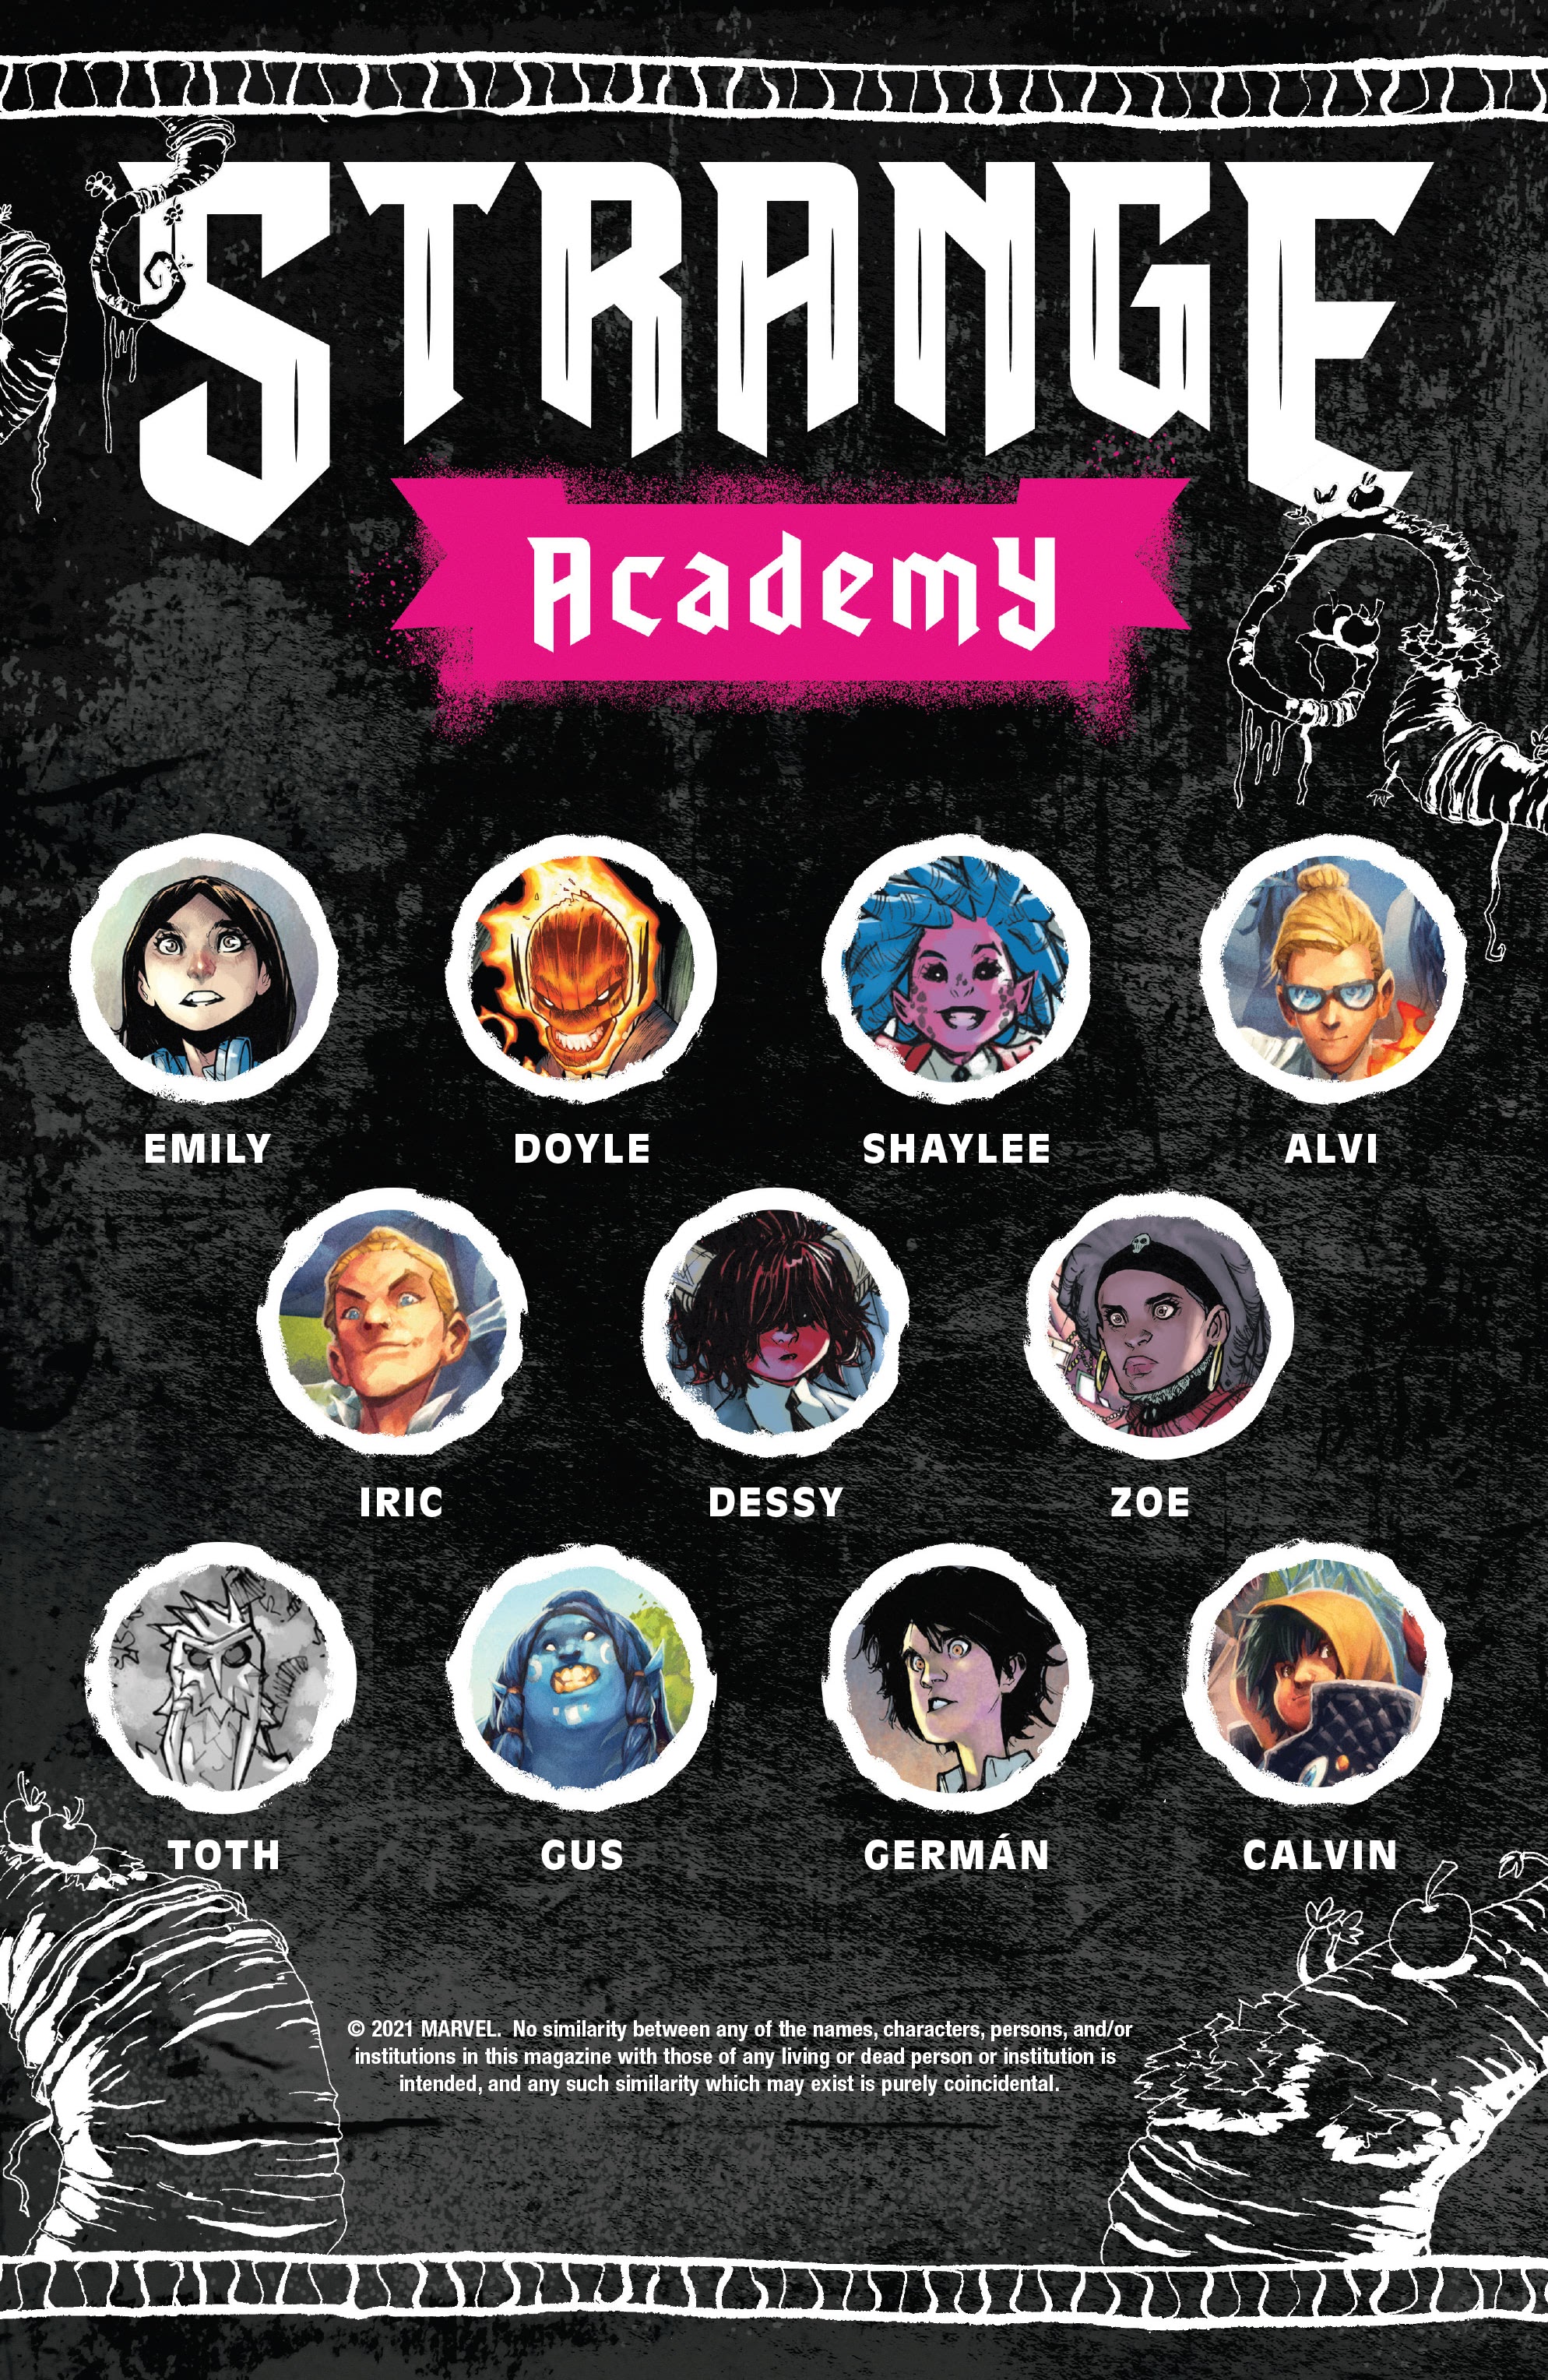 Read online Strange Academy comic -  Issue #12 - 3